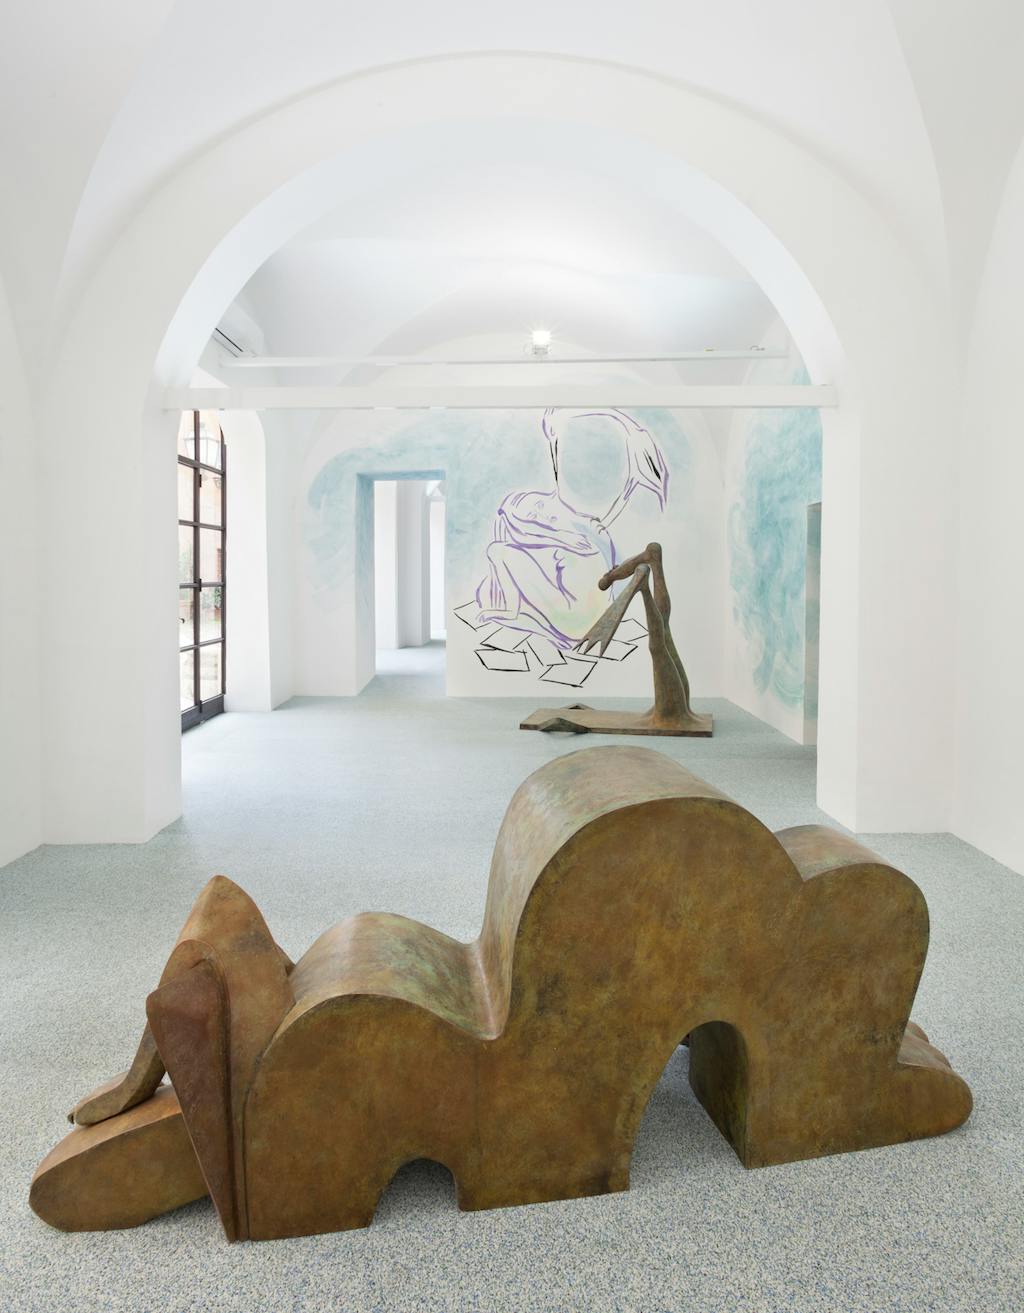 Exhibition view, Fondazione Memmo, Rome - © kamel mennour